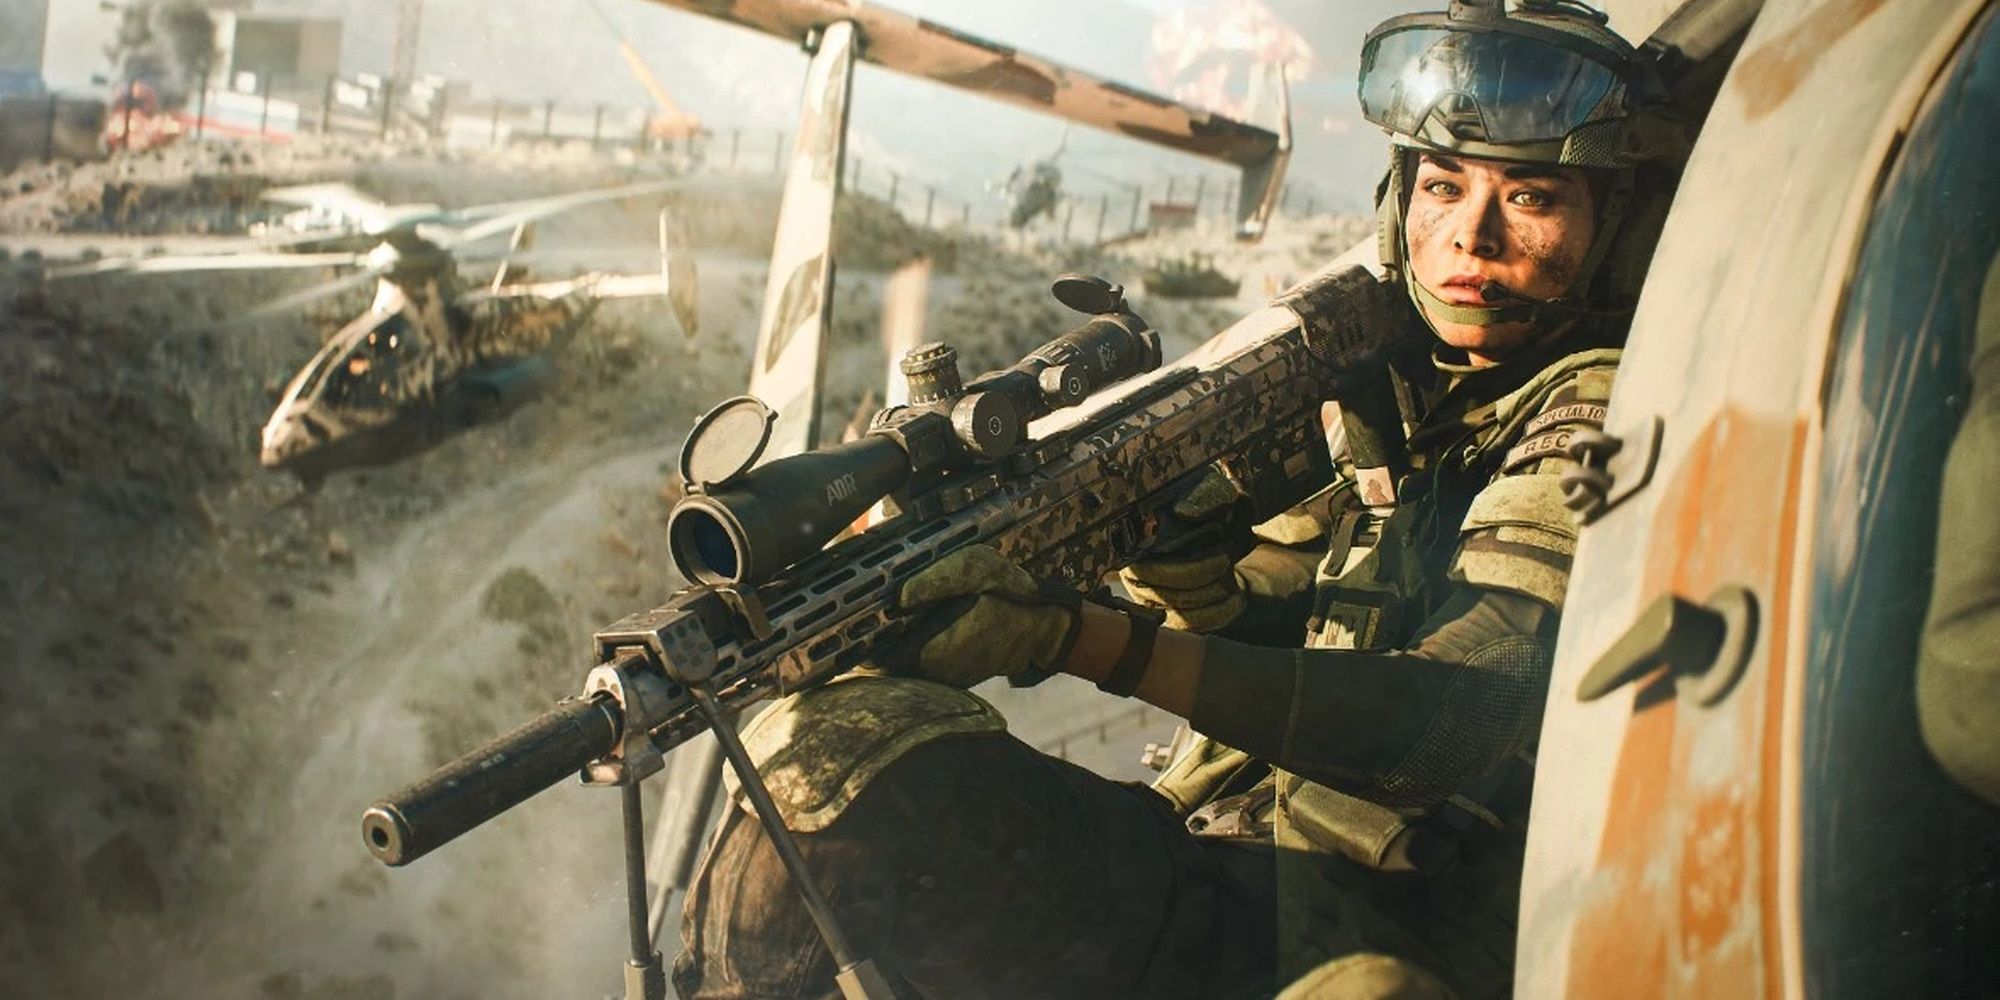 Camila Blasco holding a gun in Battlefield 2042.